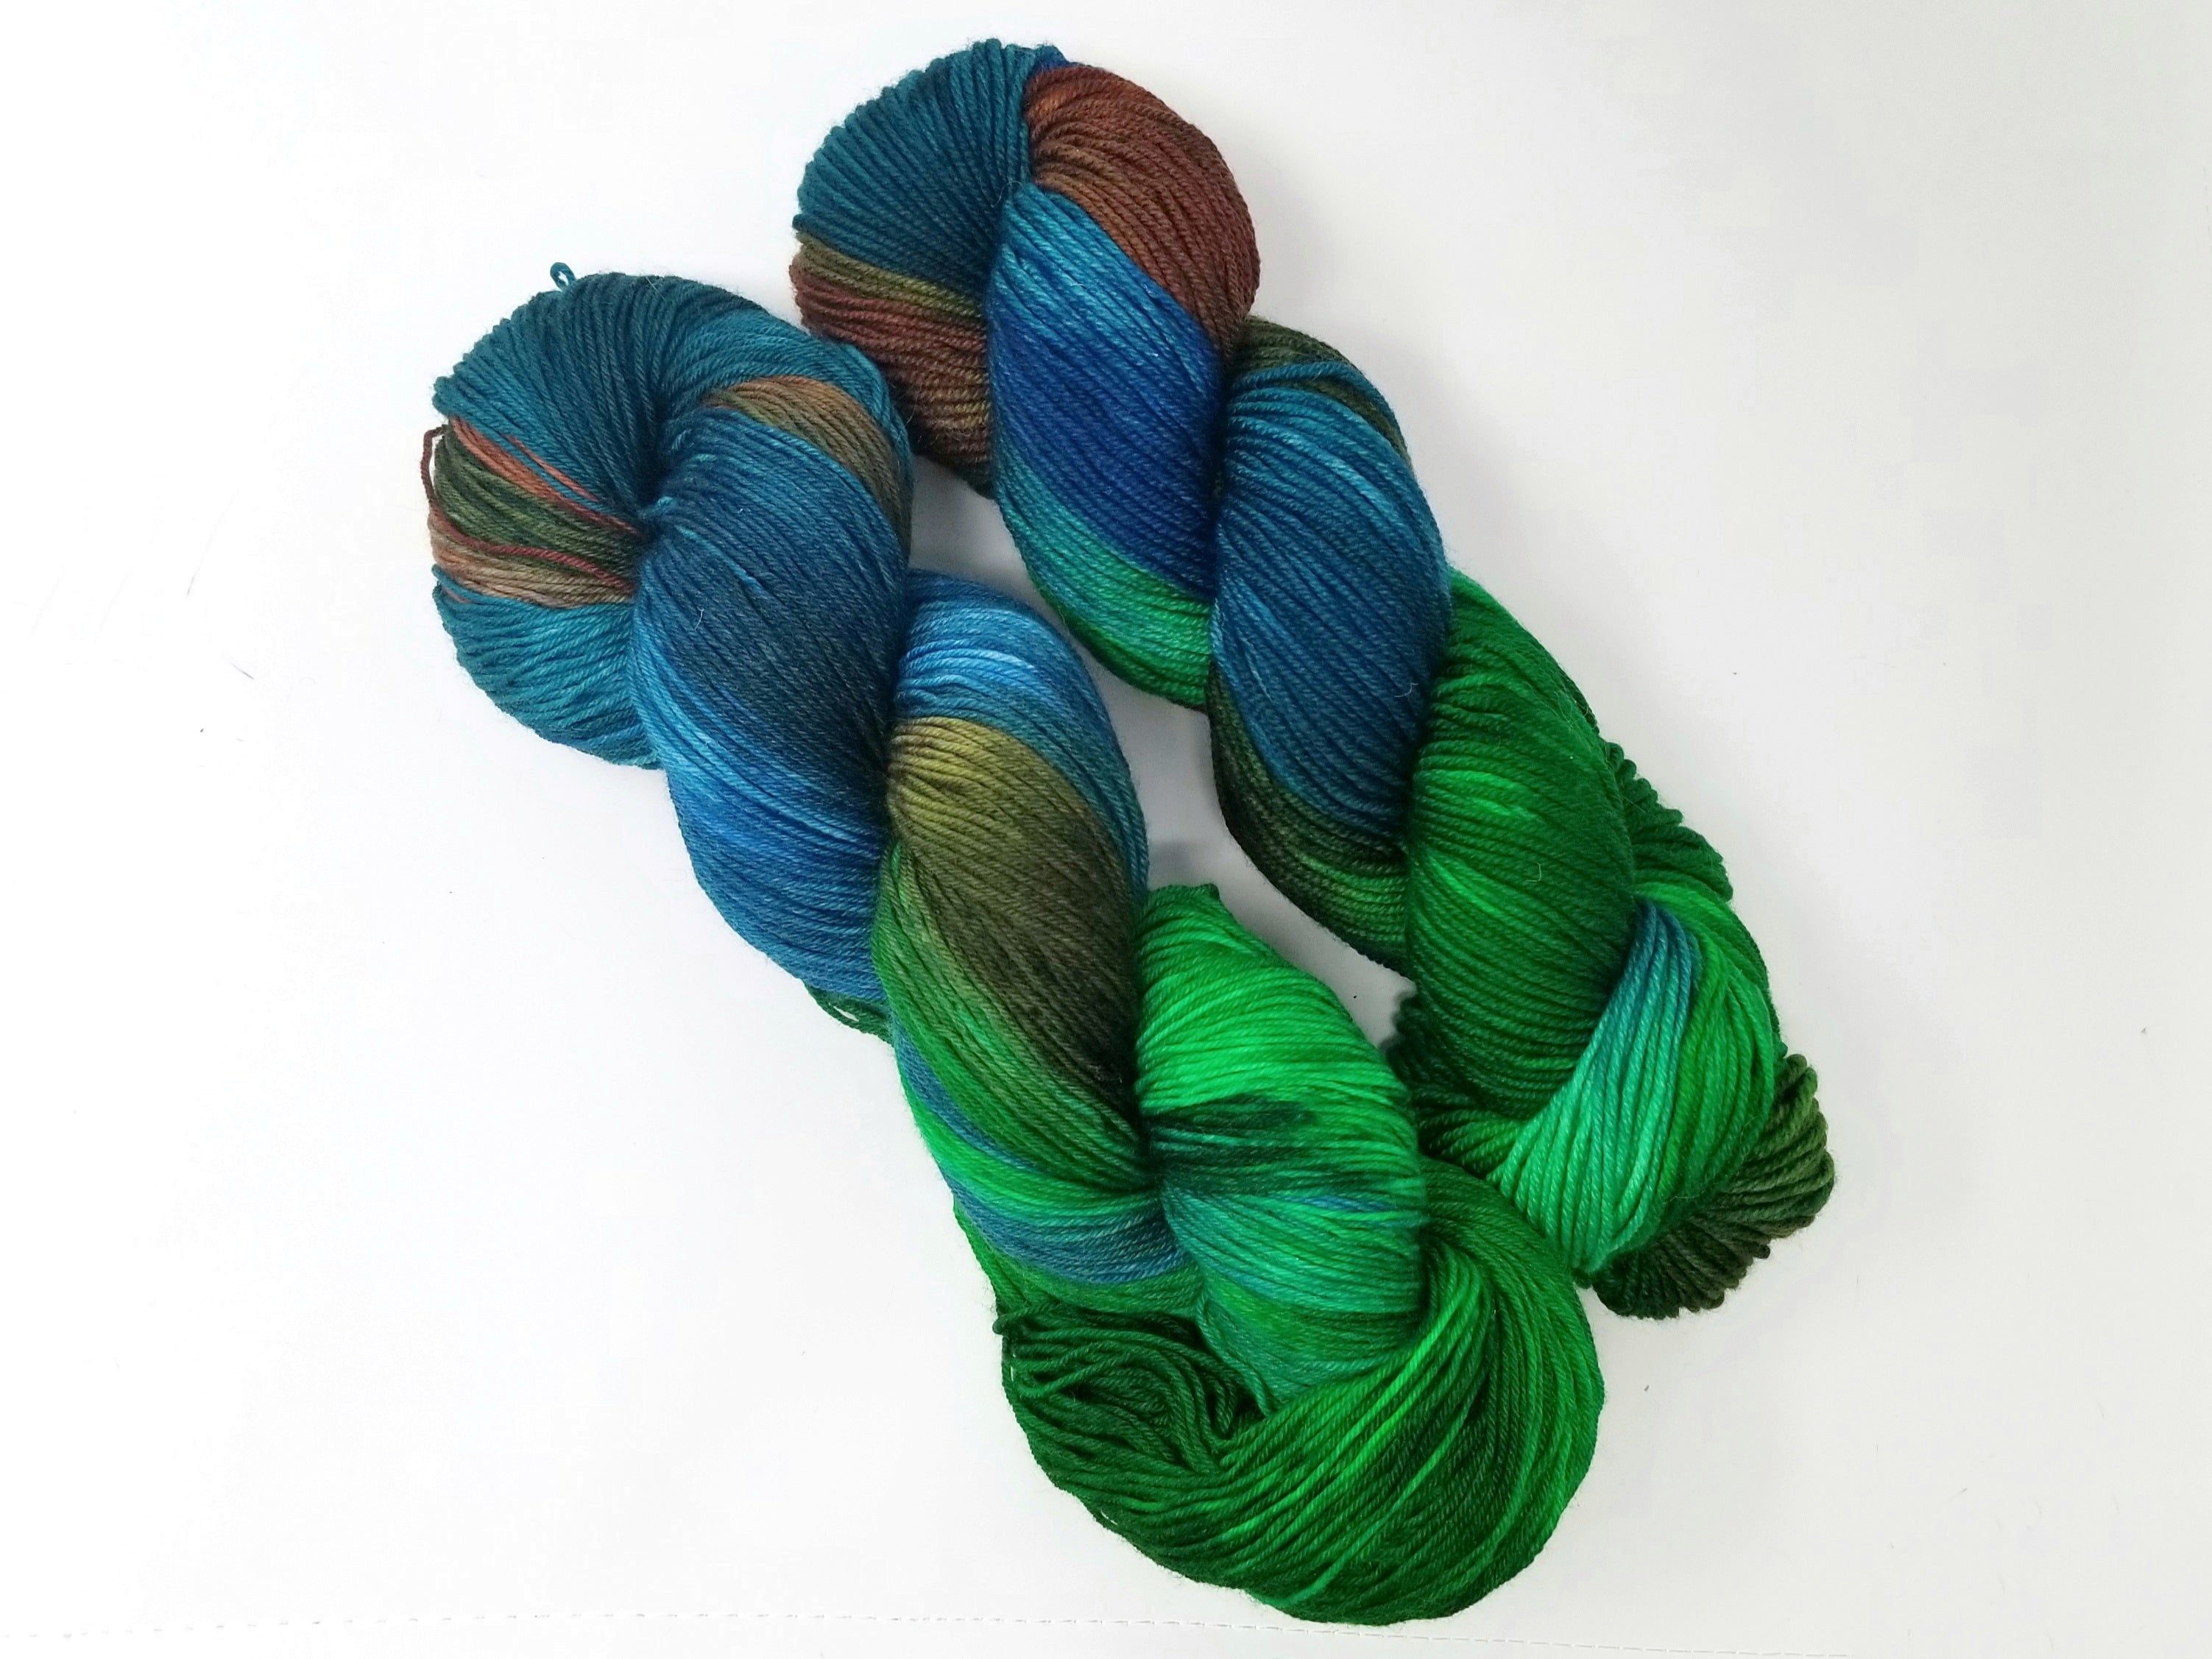 Mending yarn wool mix cobalt blue 15m